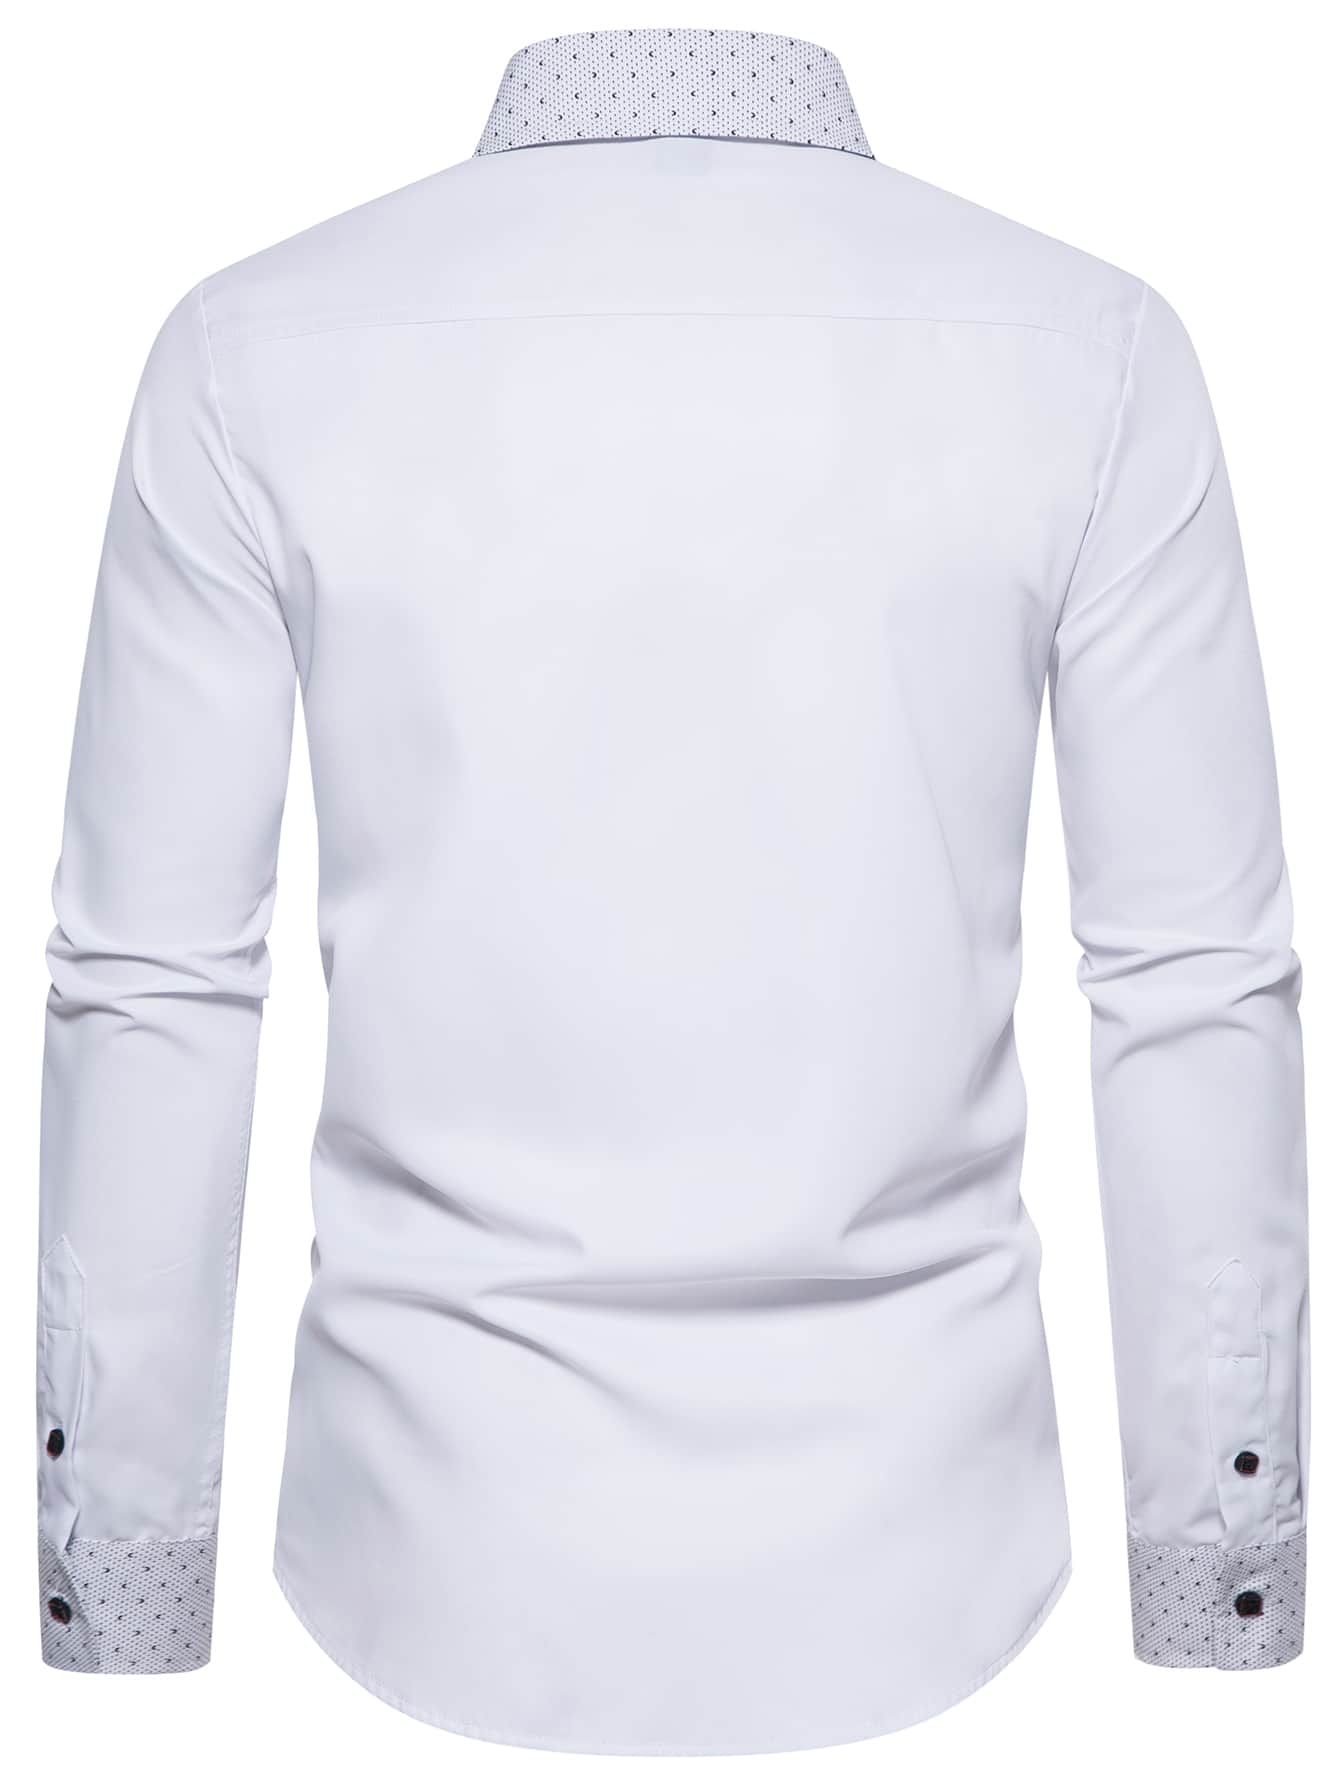 Manfinity Mode Men Contrast Trim Button Up Shirt